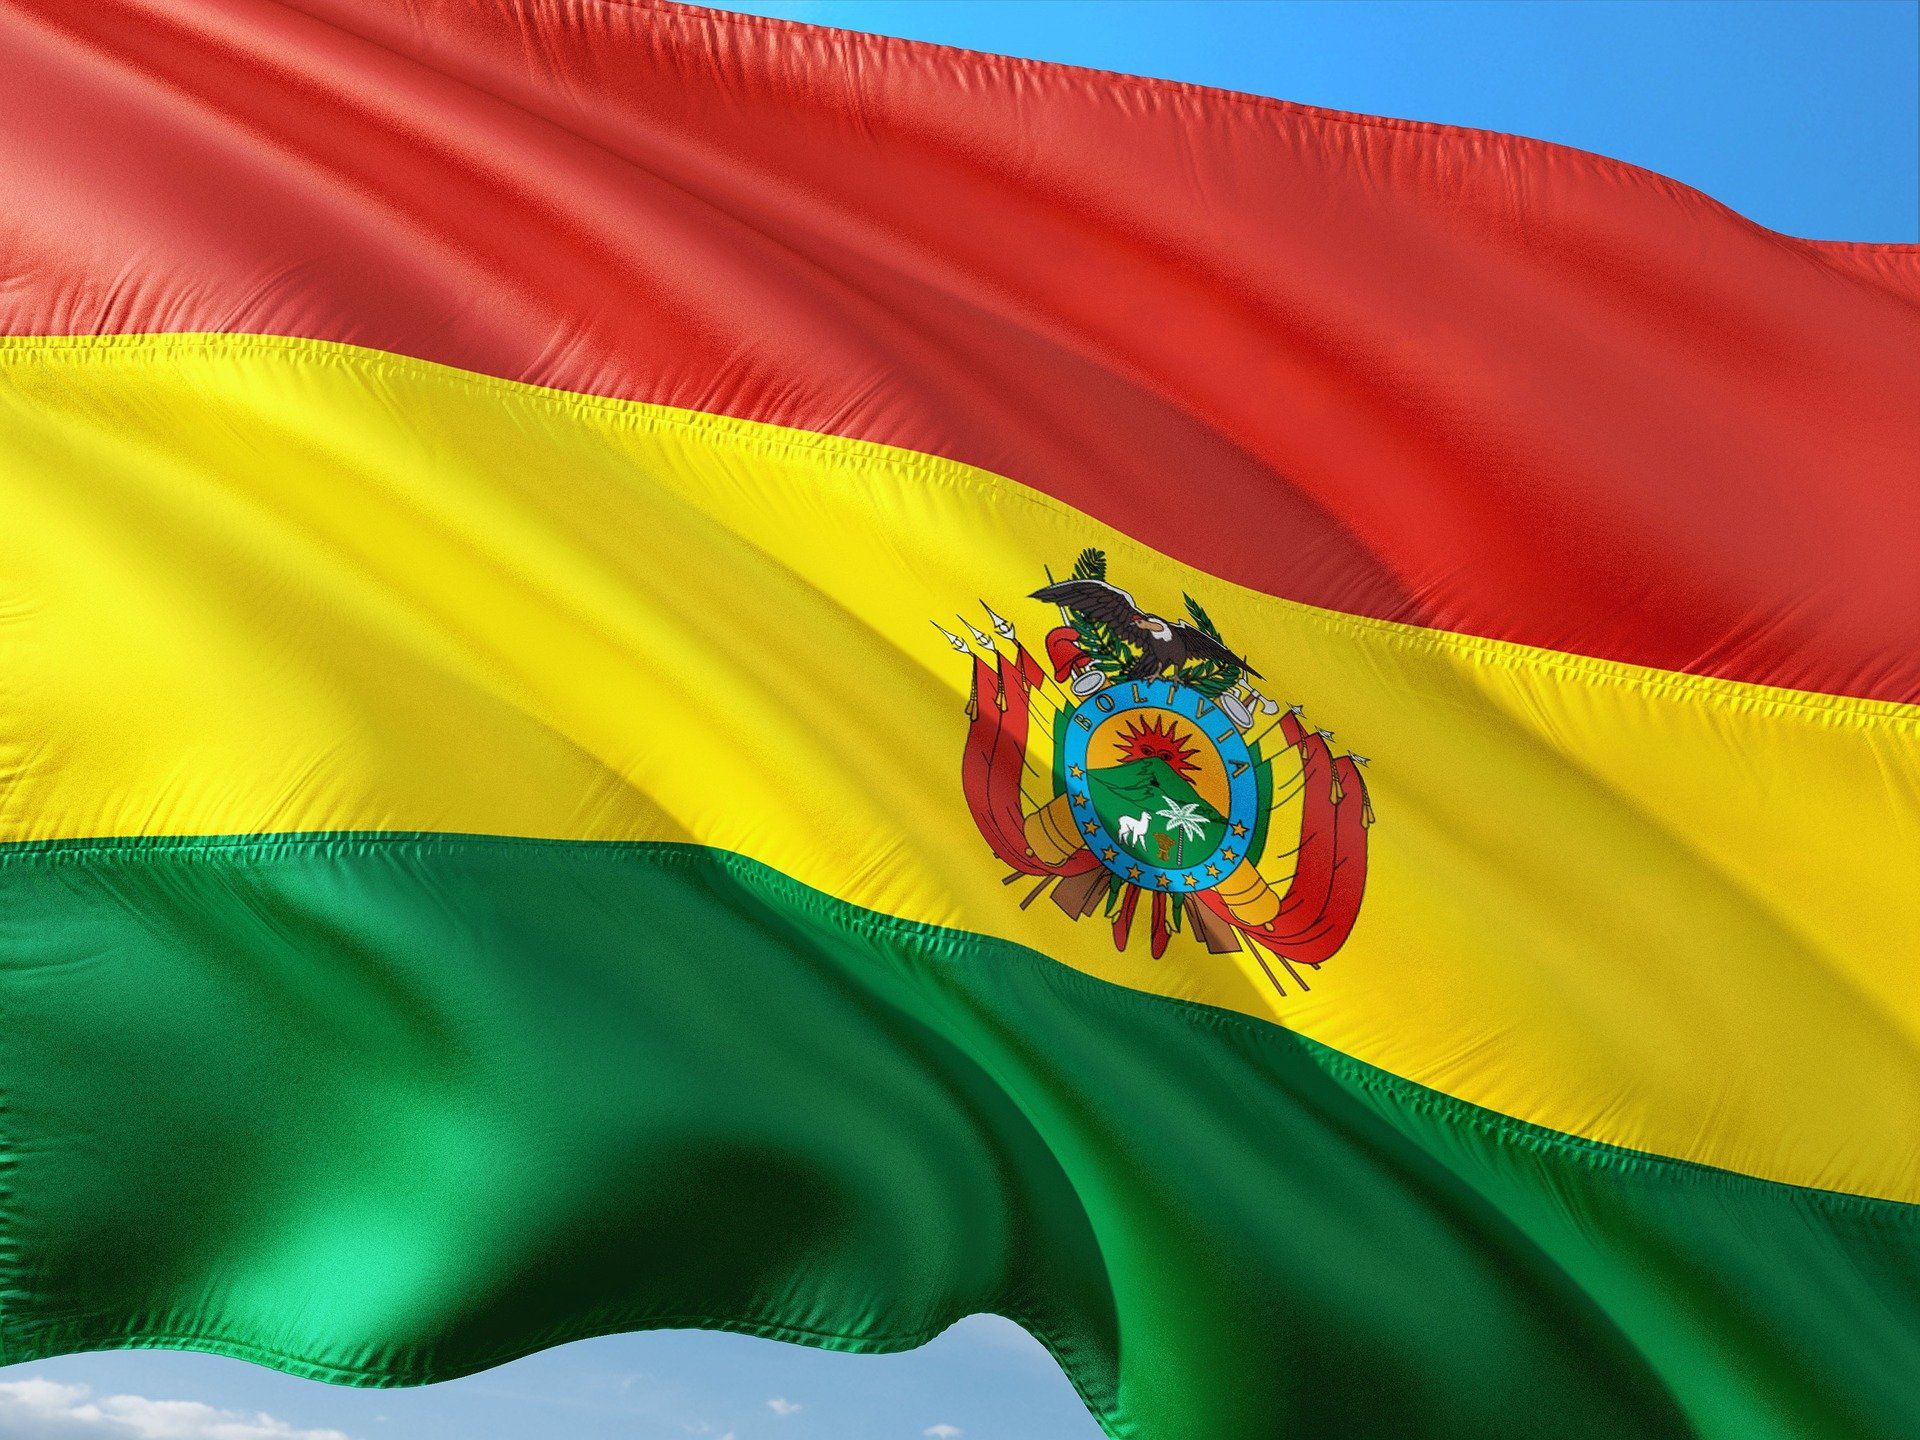 Bandera de Bolivia ondeando